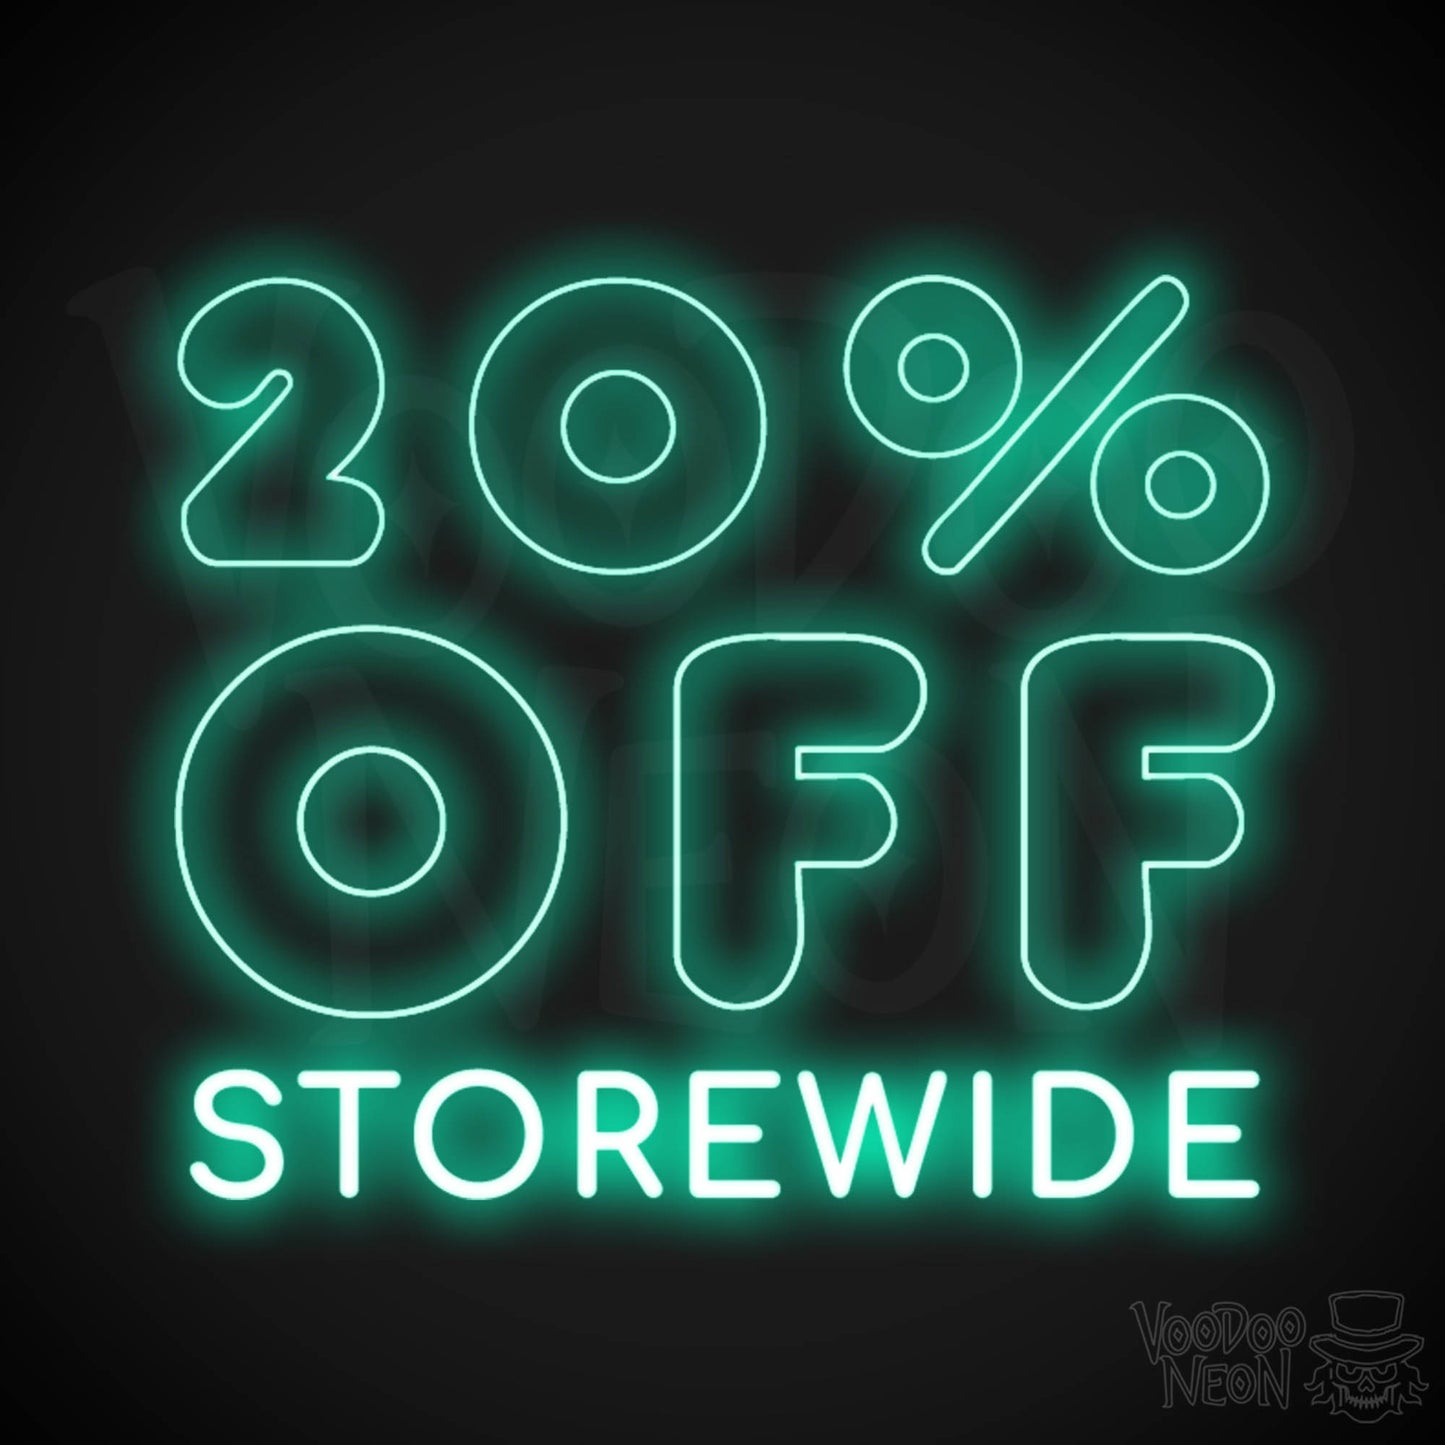 20% Off Storewide Neon Sign - 20% Off Storewide Sign - LED Shop Sign - Color Light Green